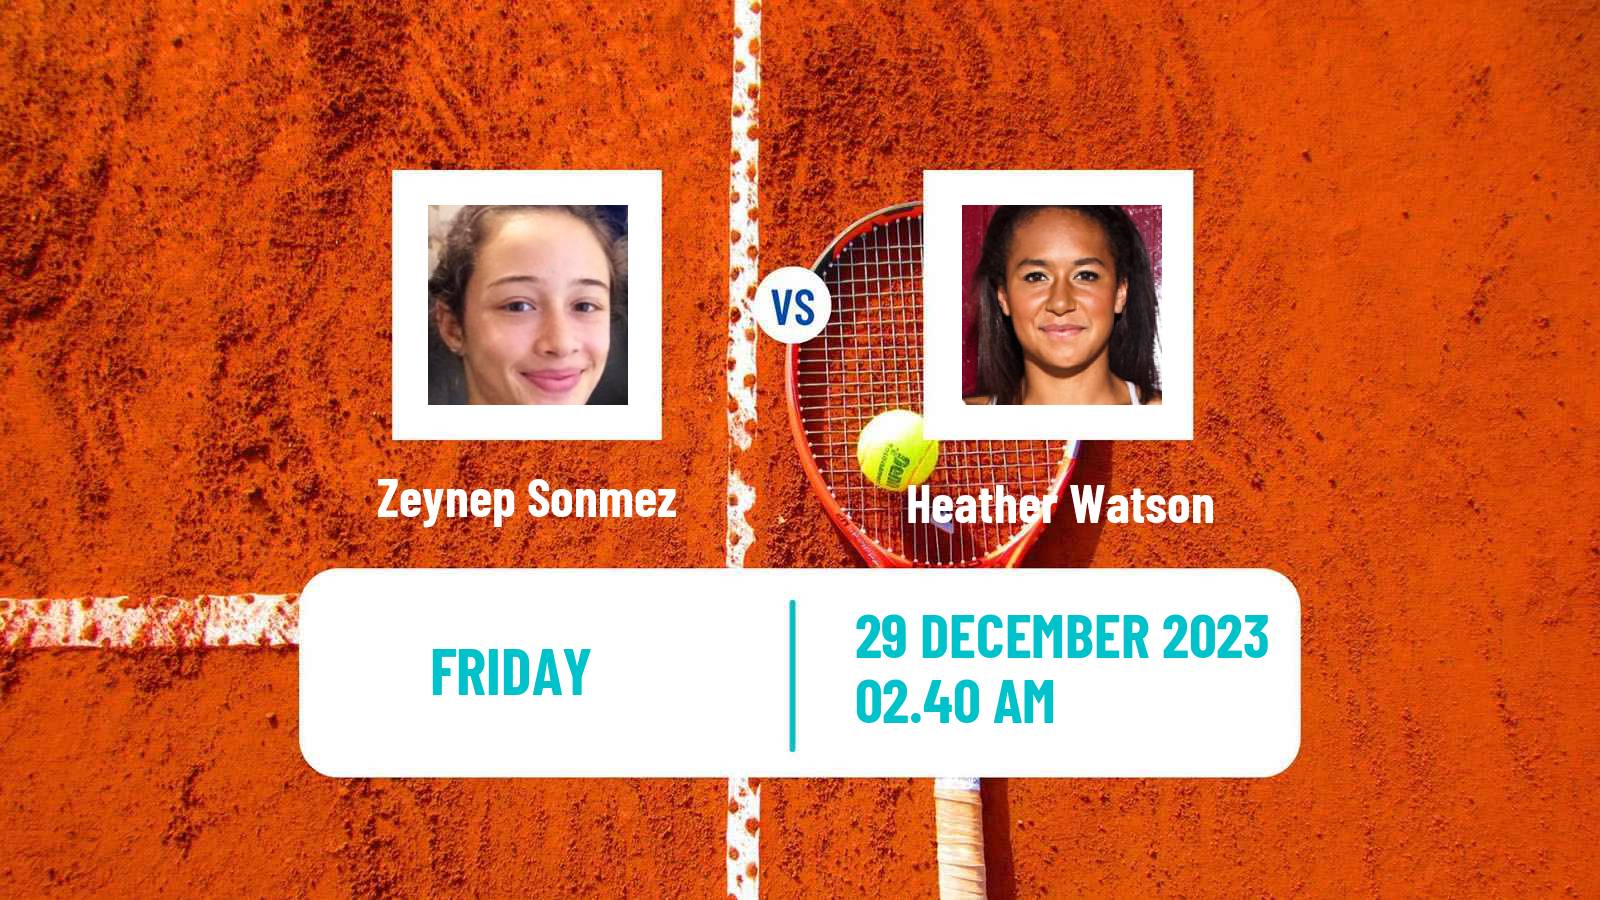 Tennis WTA Brisbane Zeynep Sonmez - Heather Watson